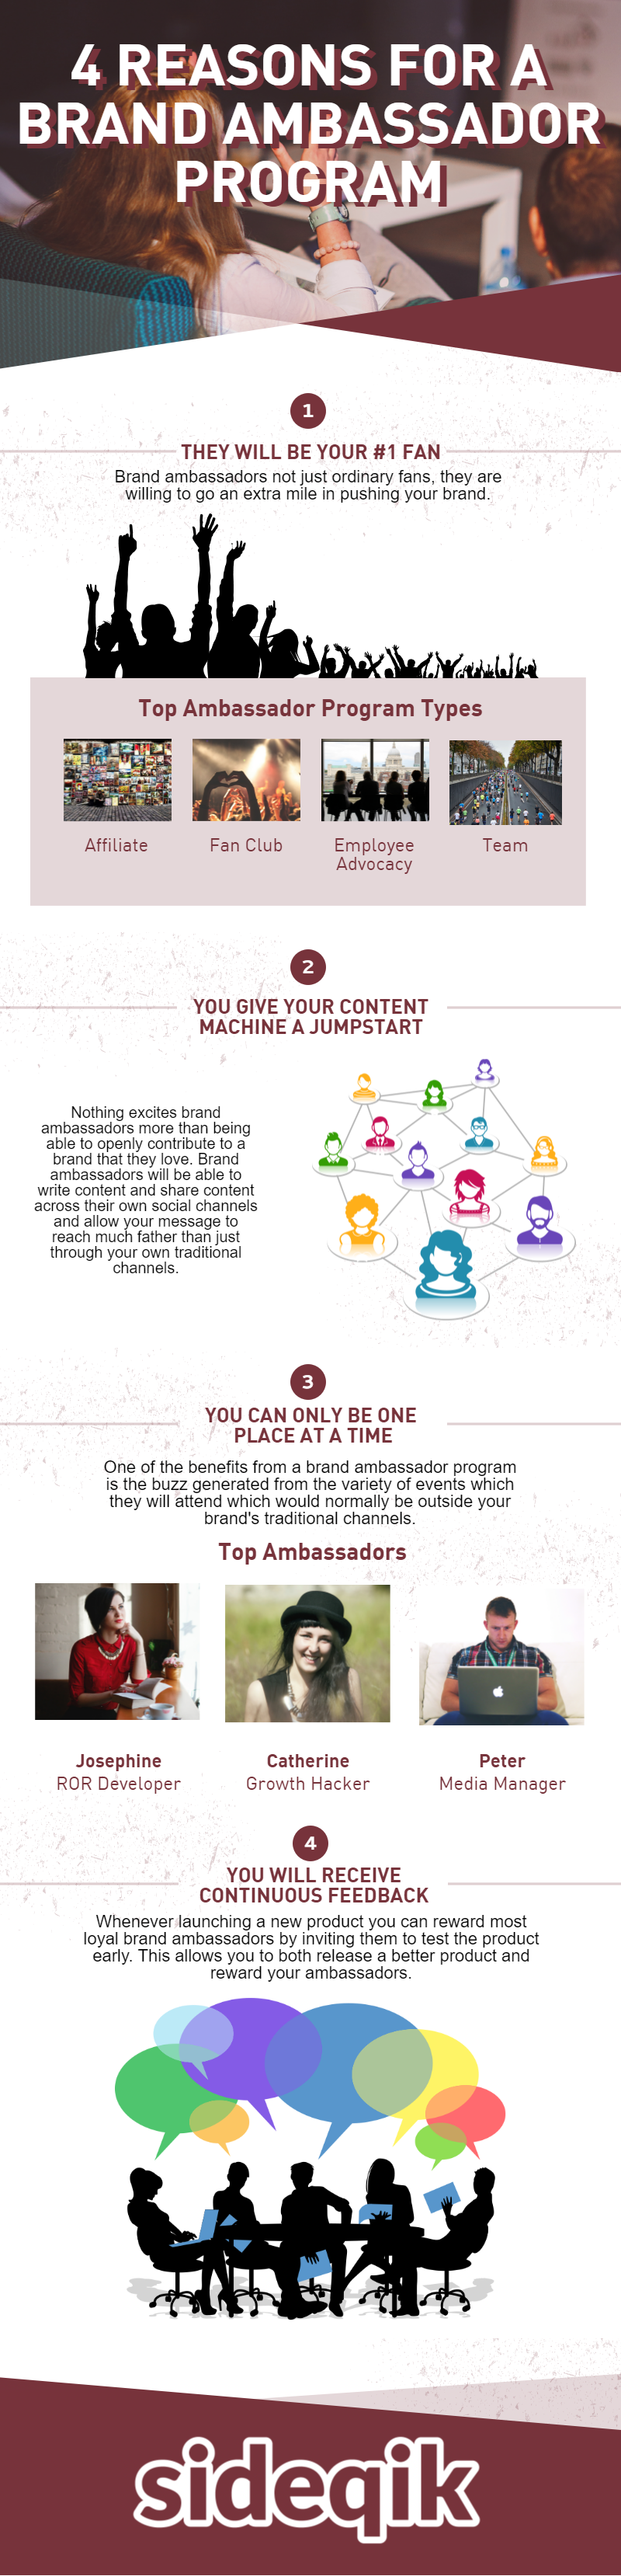 brand ambassador program infographic